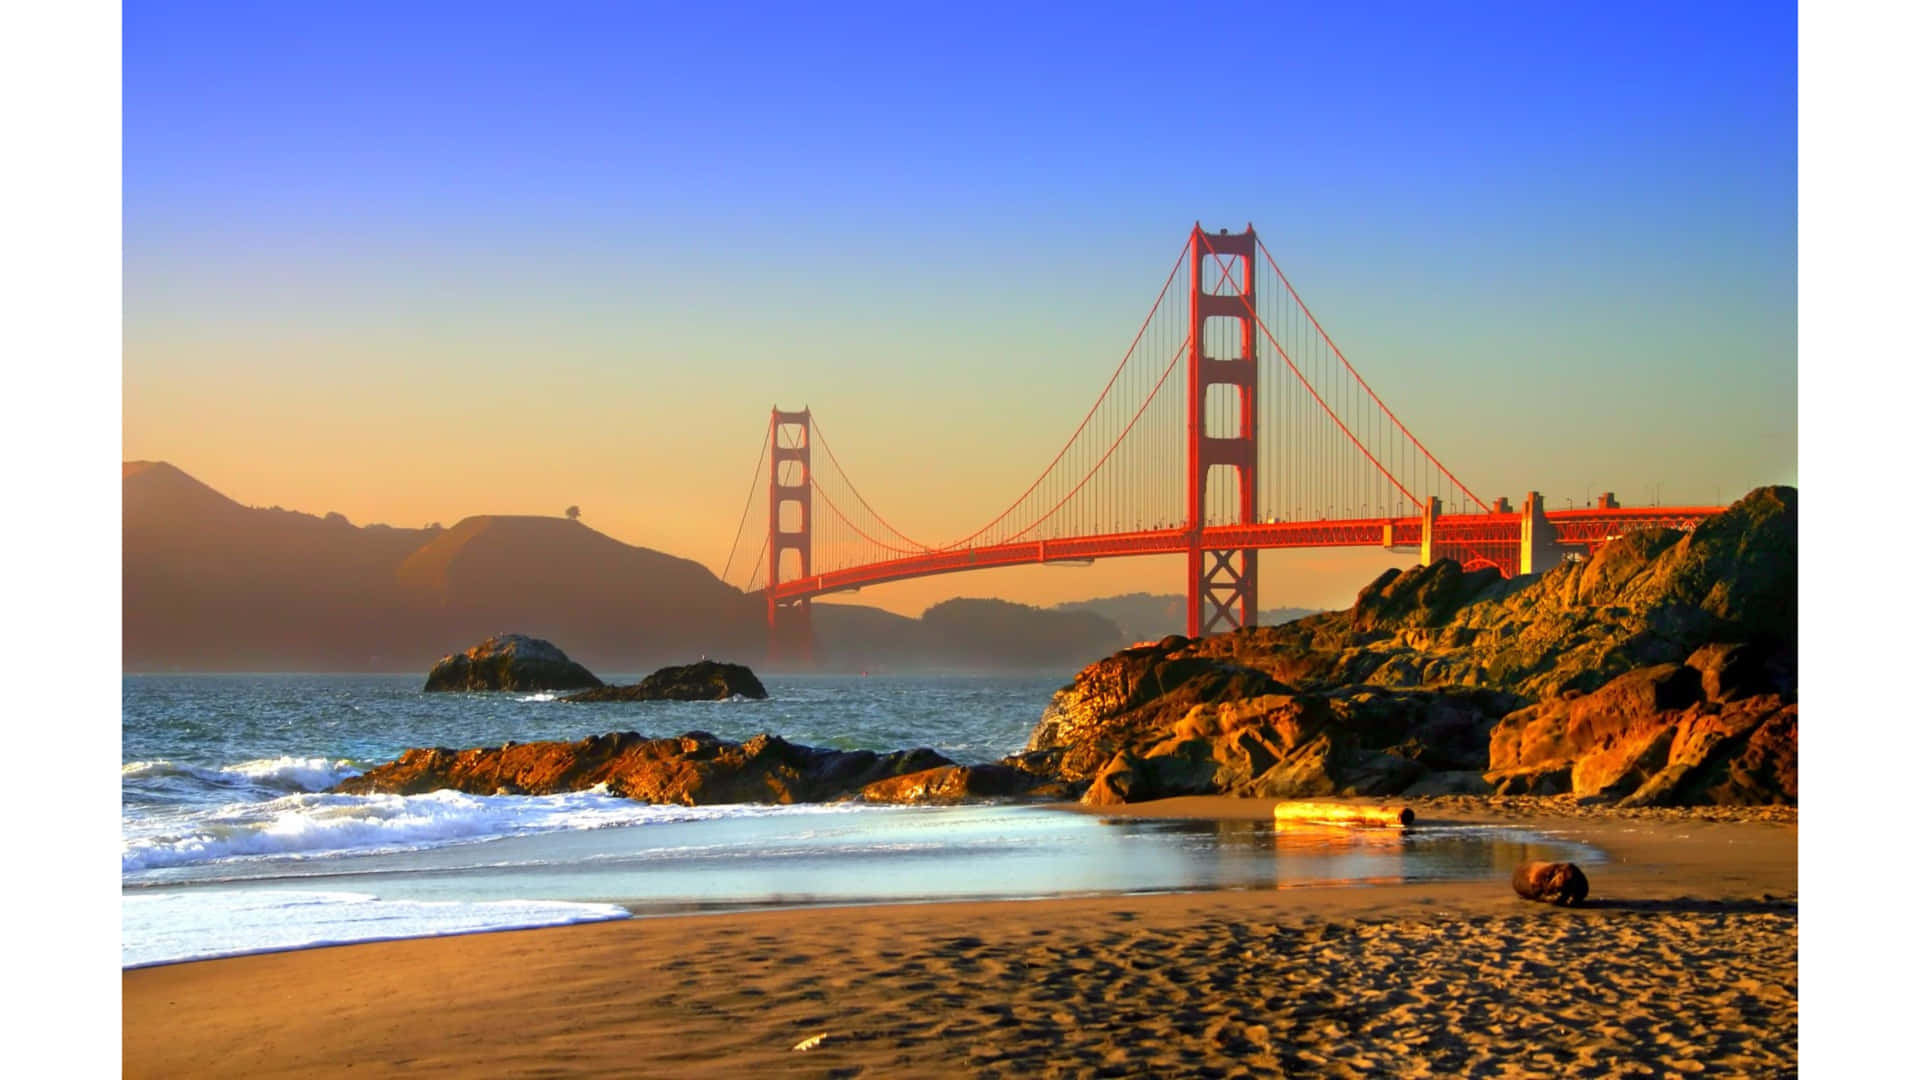 "Enjoy the beauty of San Francisco"